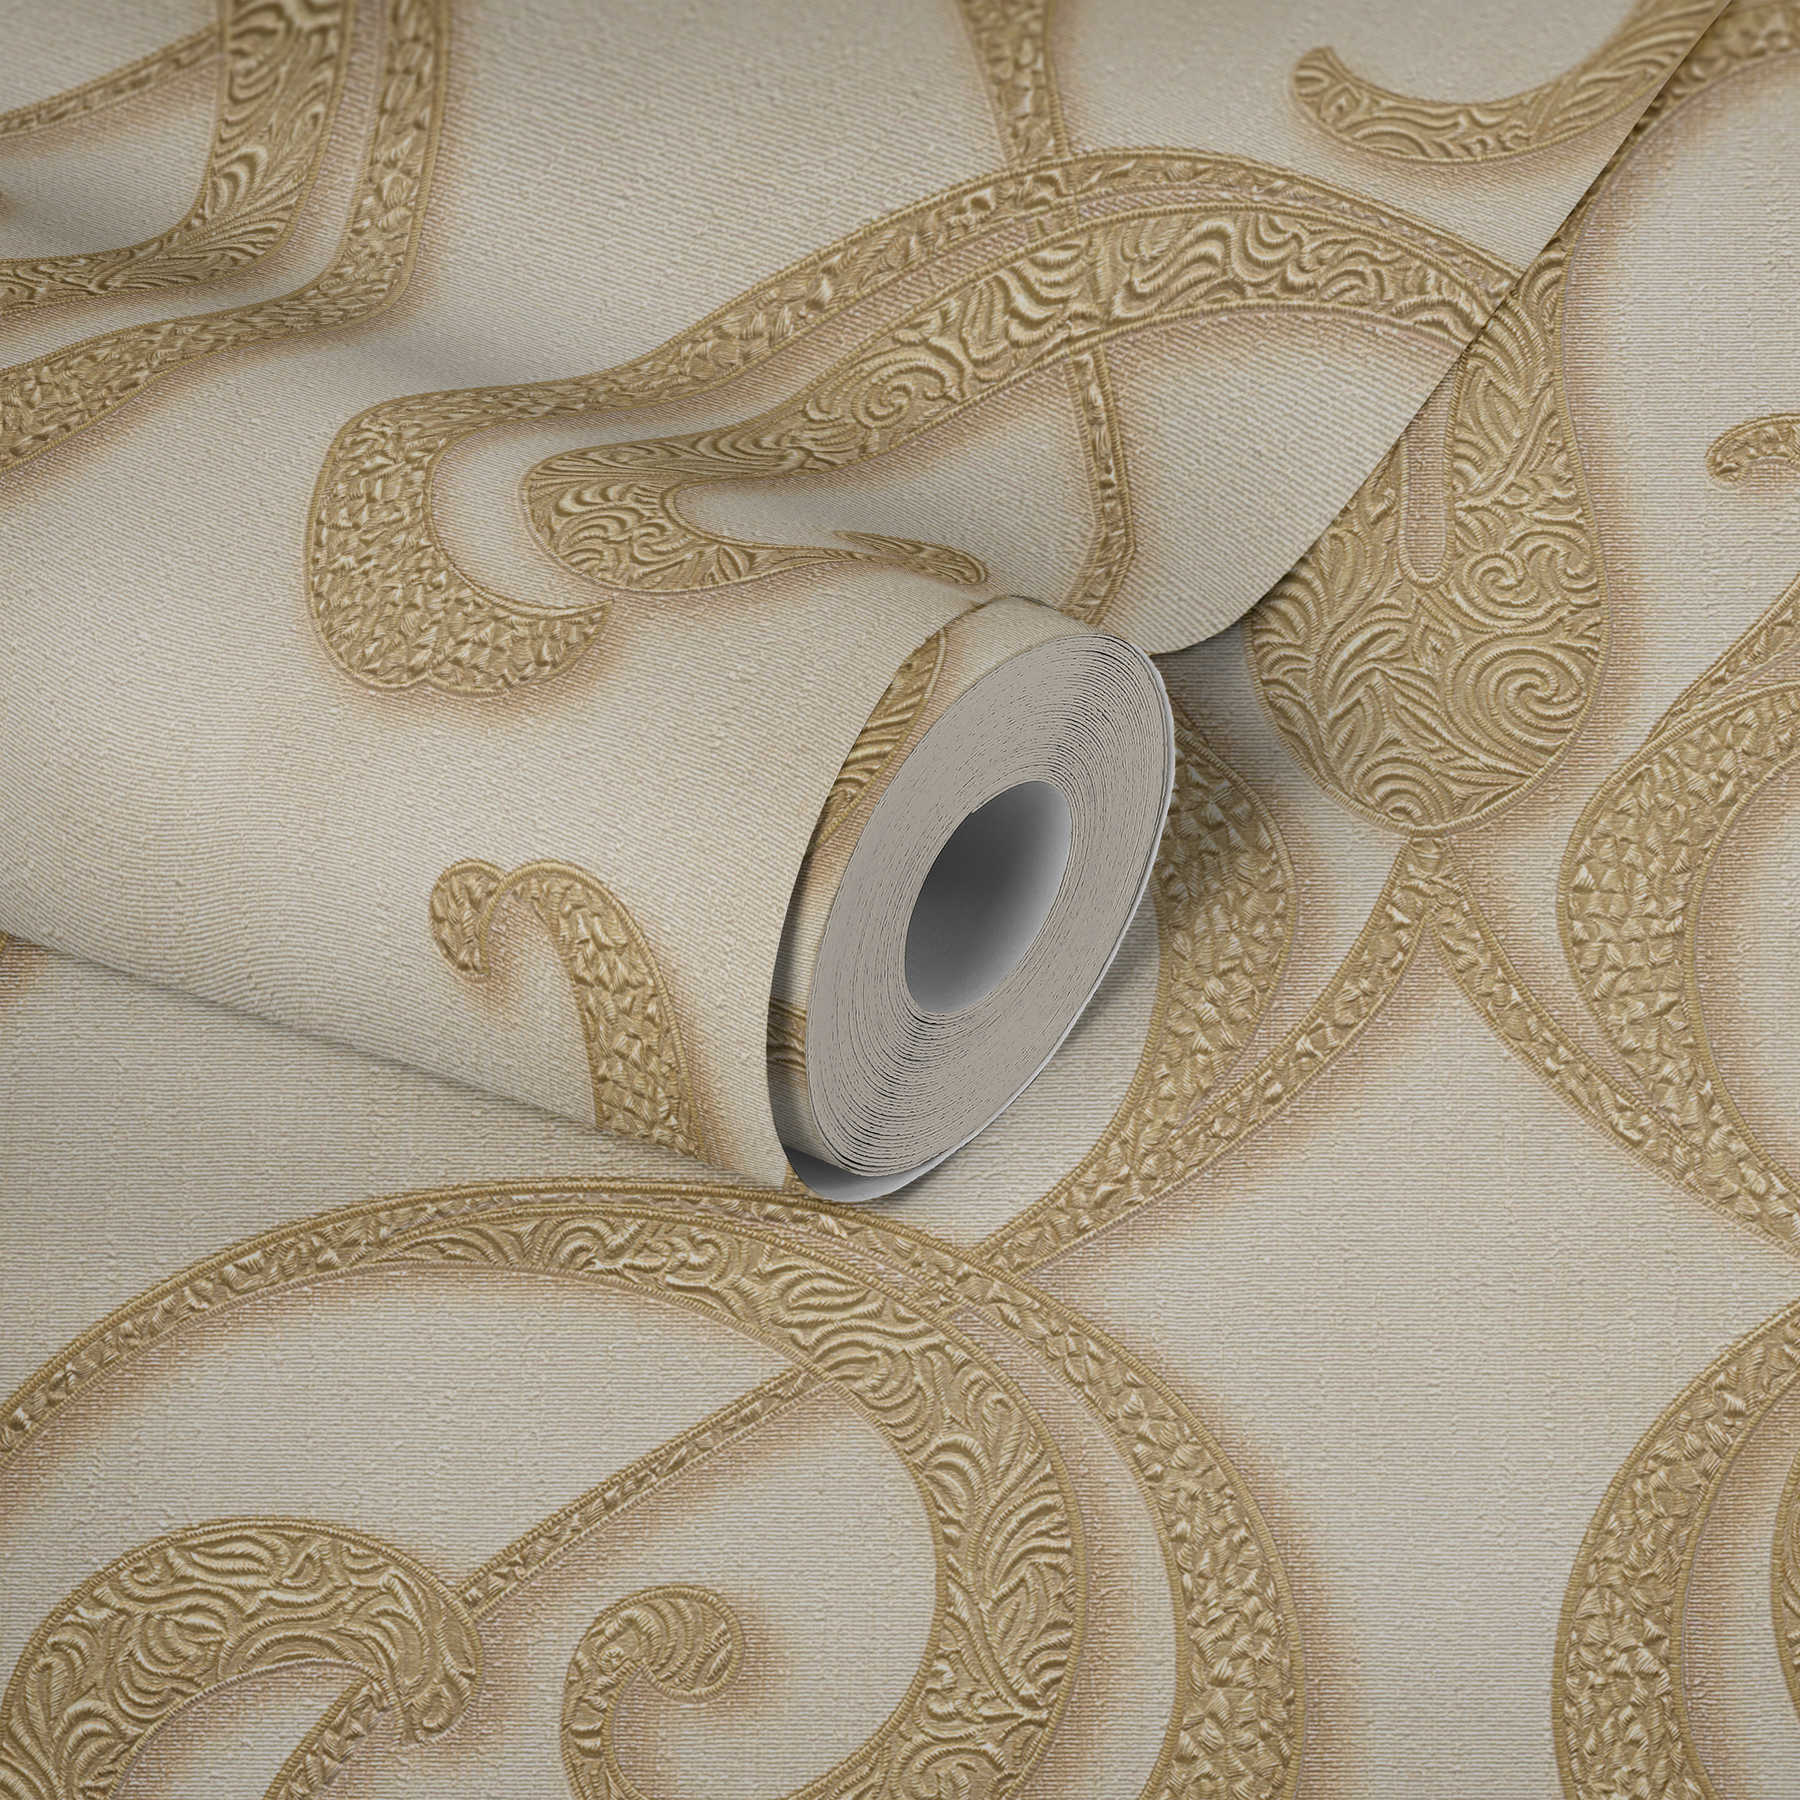             Metallic behang met filigraan ornament patroon - crème
        